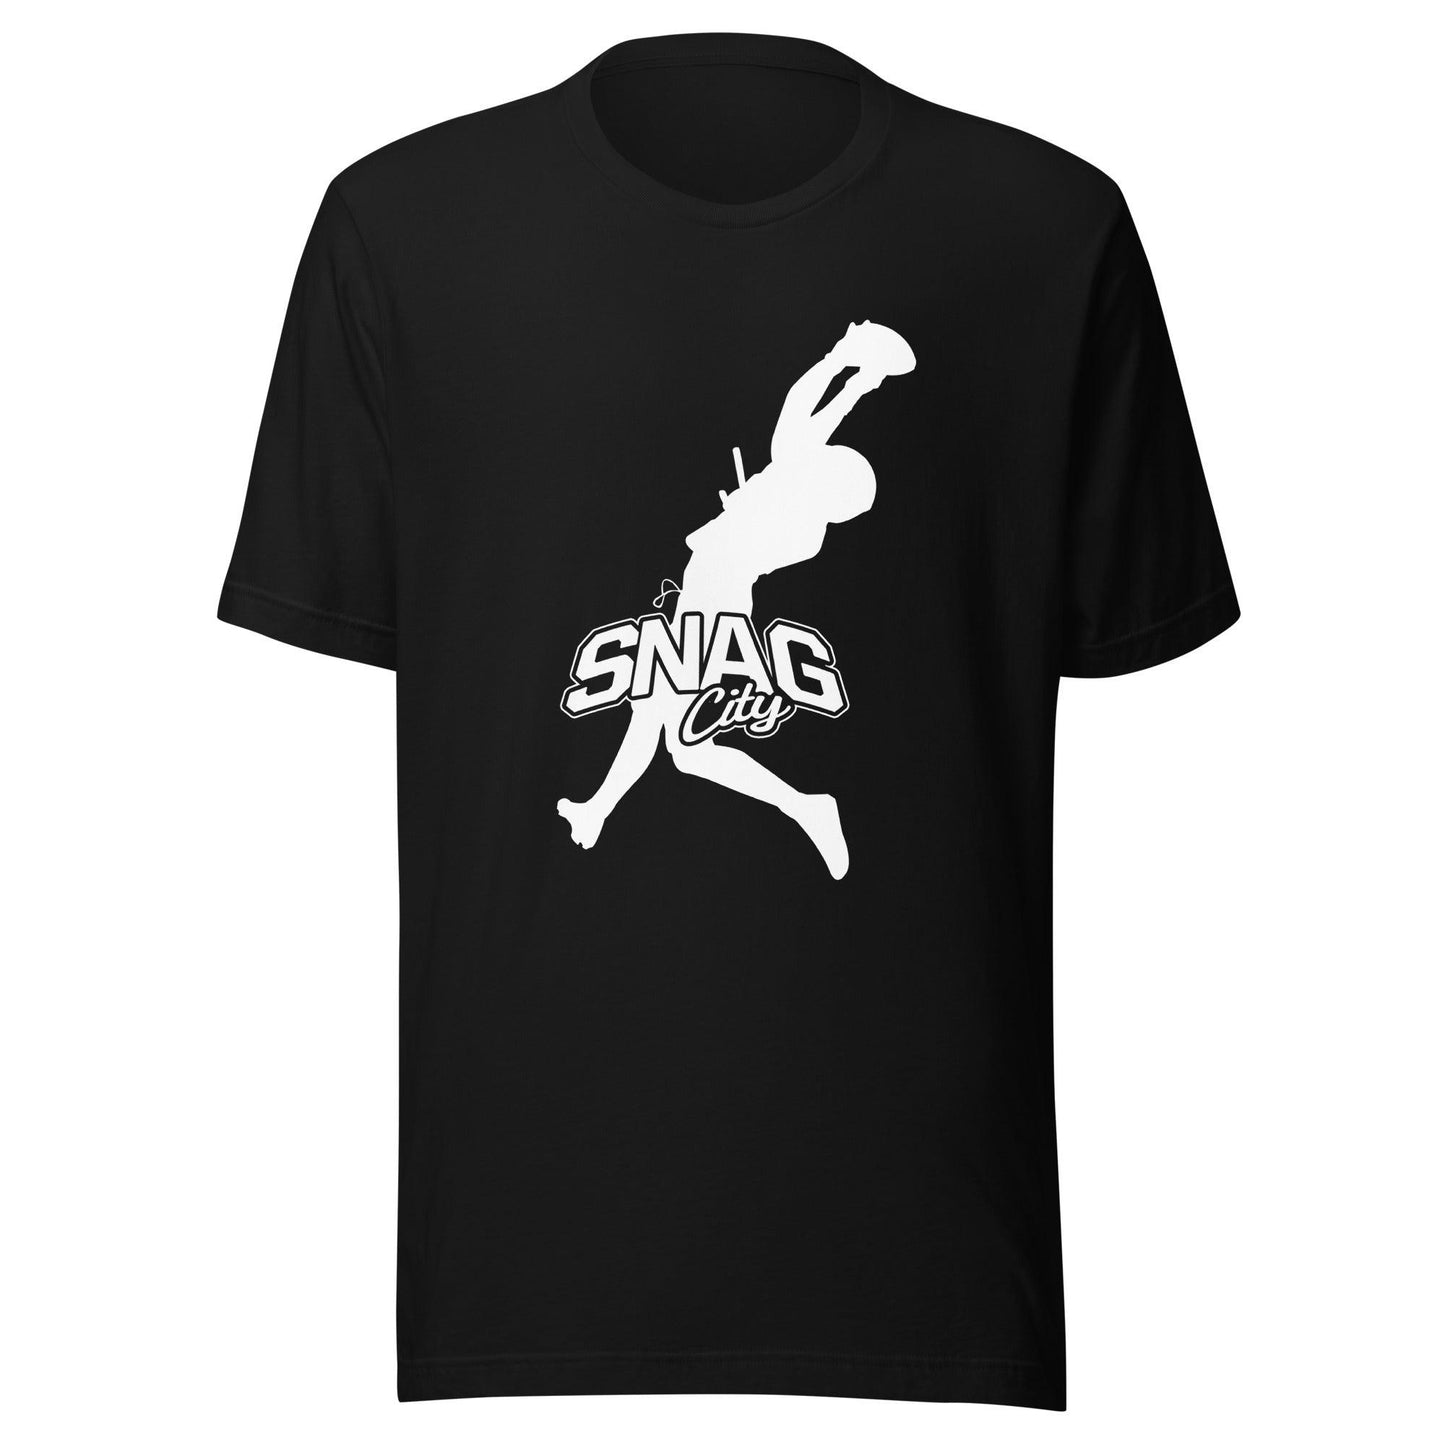 Khowtv "Snag City" t-shirt - Fan Arch